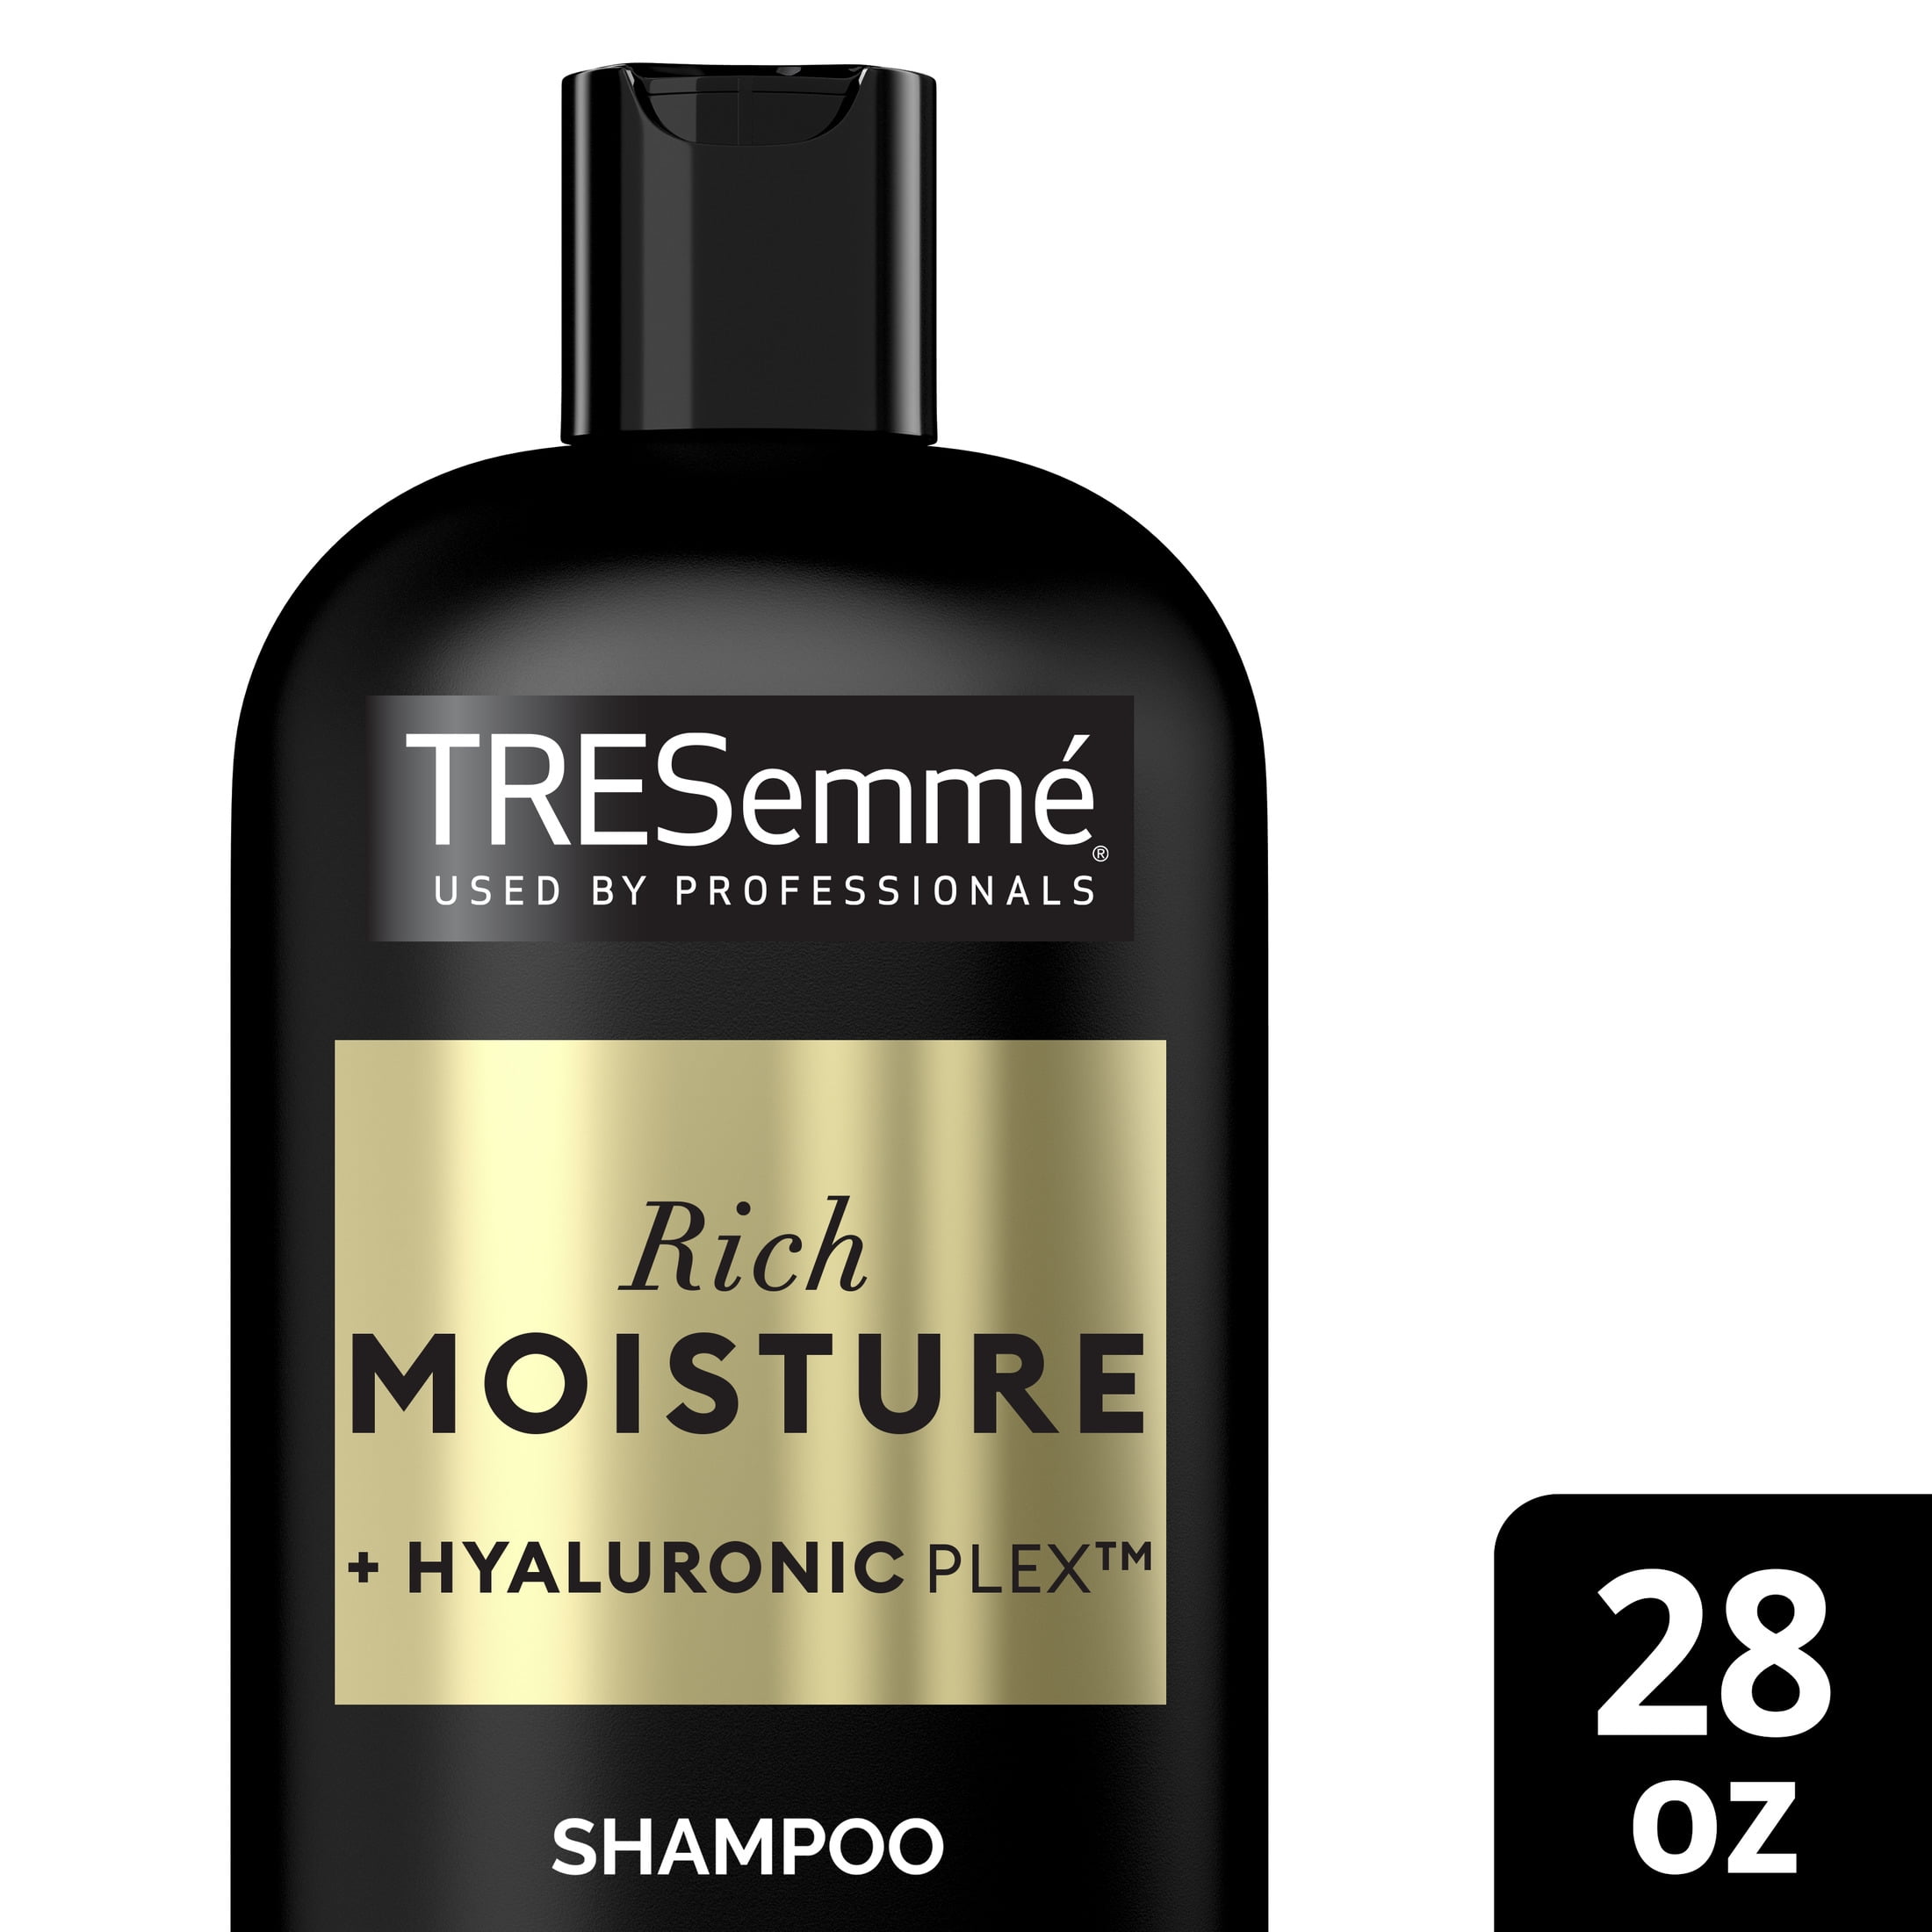 Rich Moisture Hyaluronic Plex Shampoo oz - Walmart.com